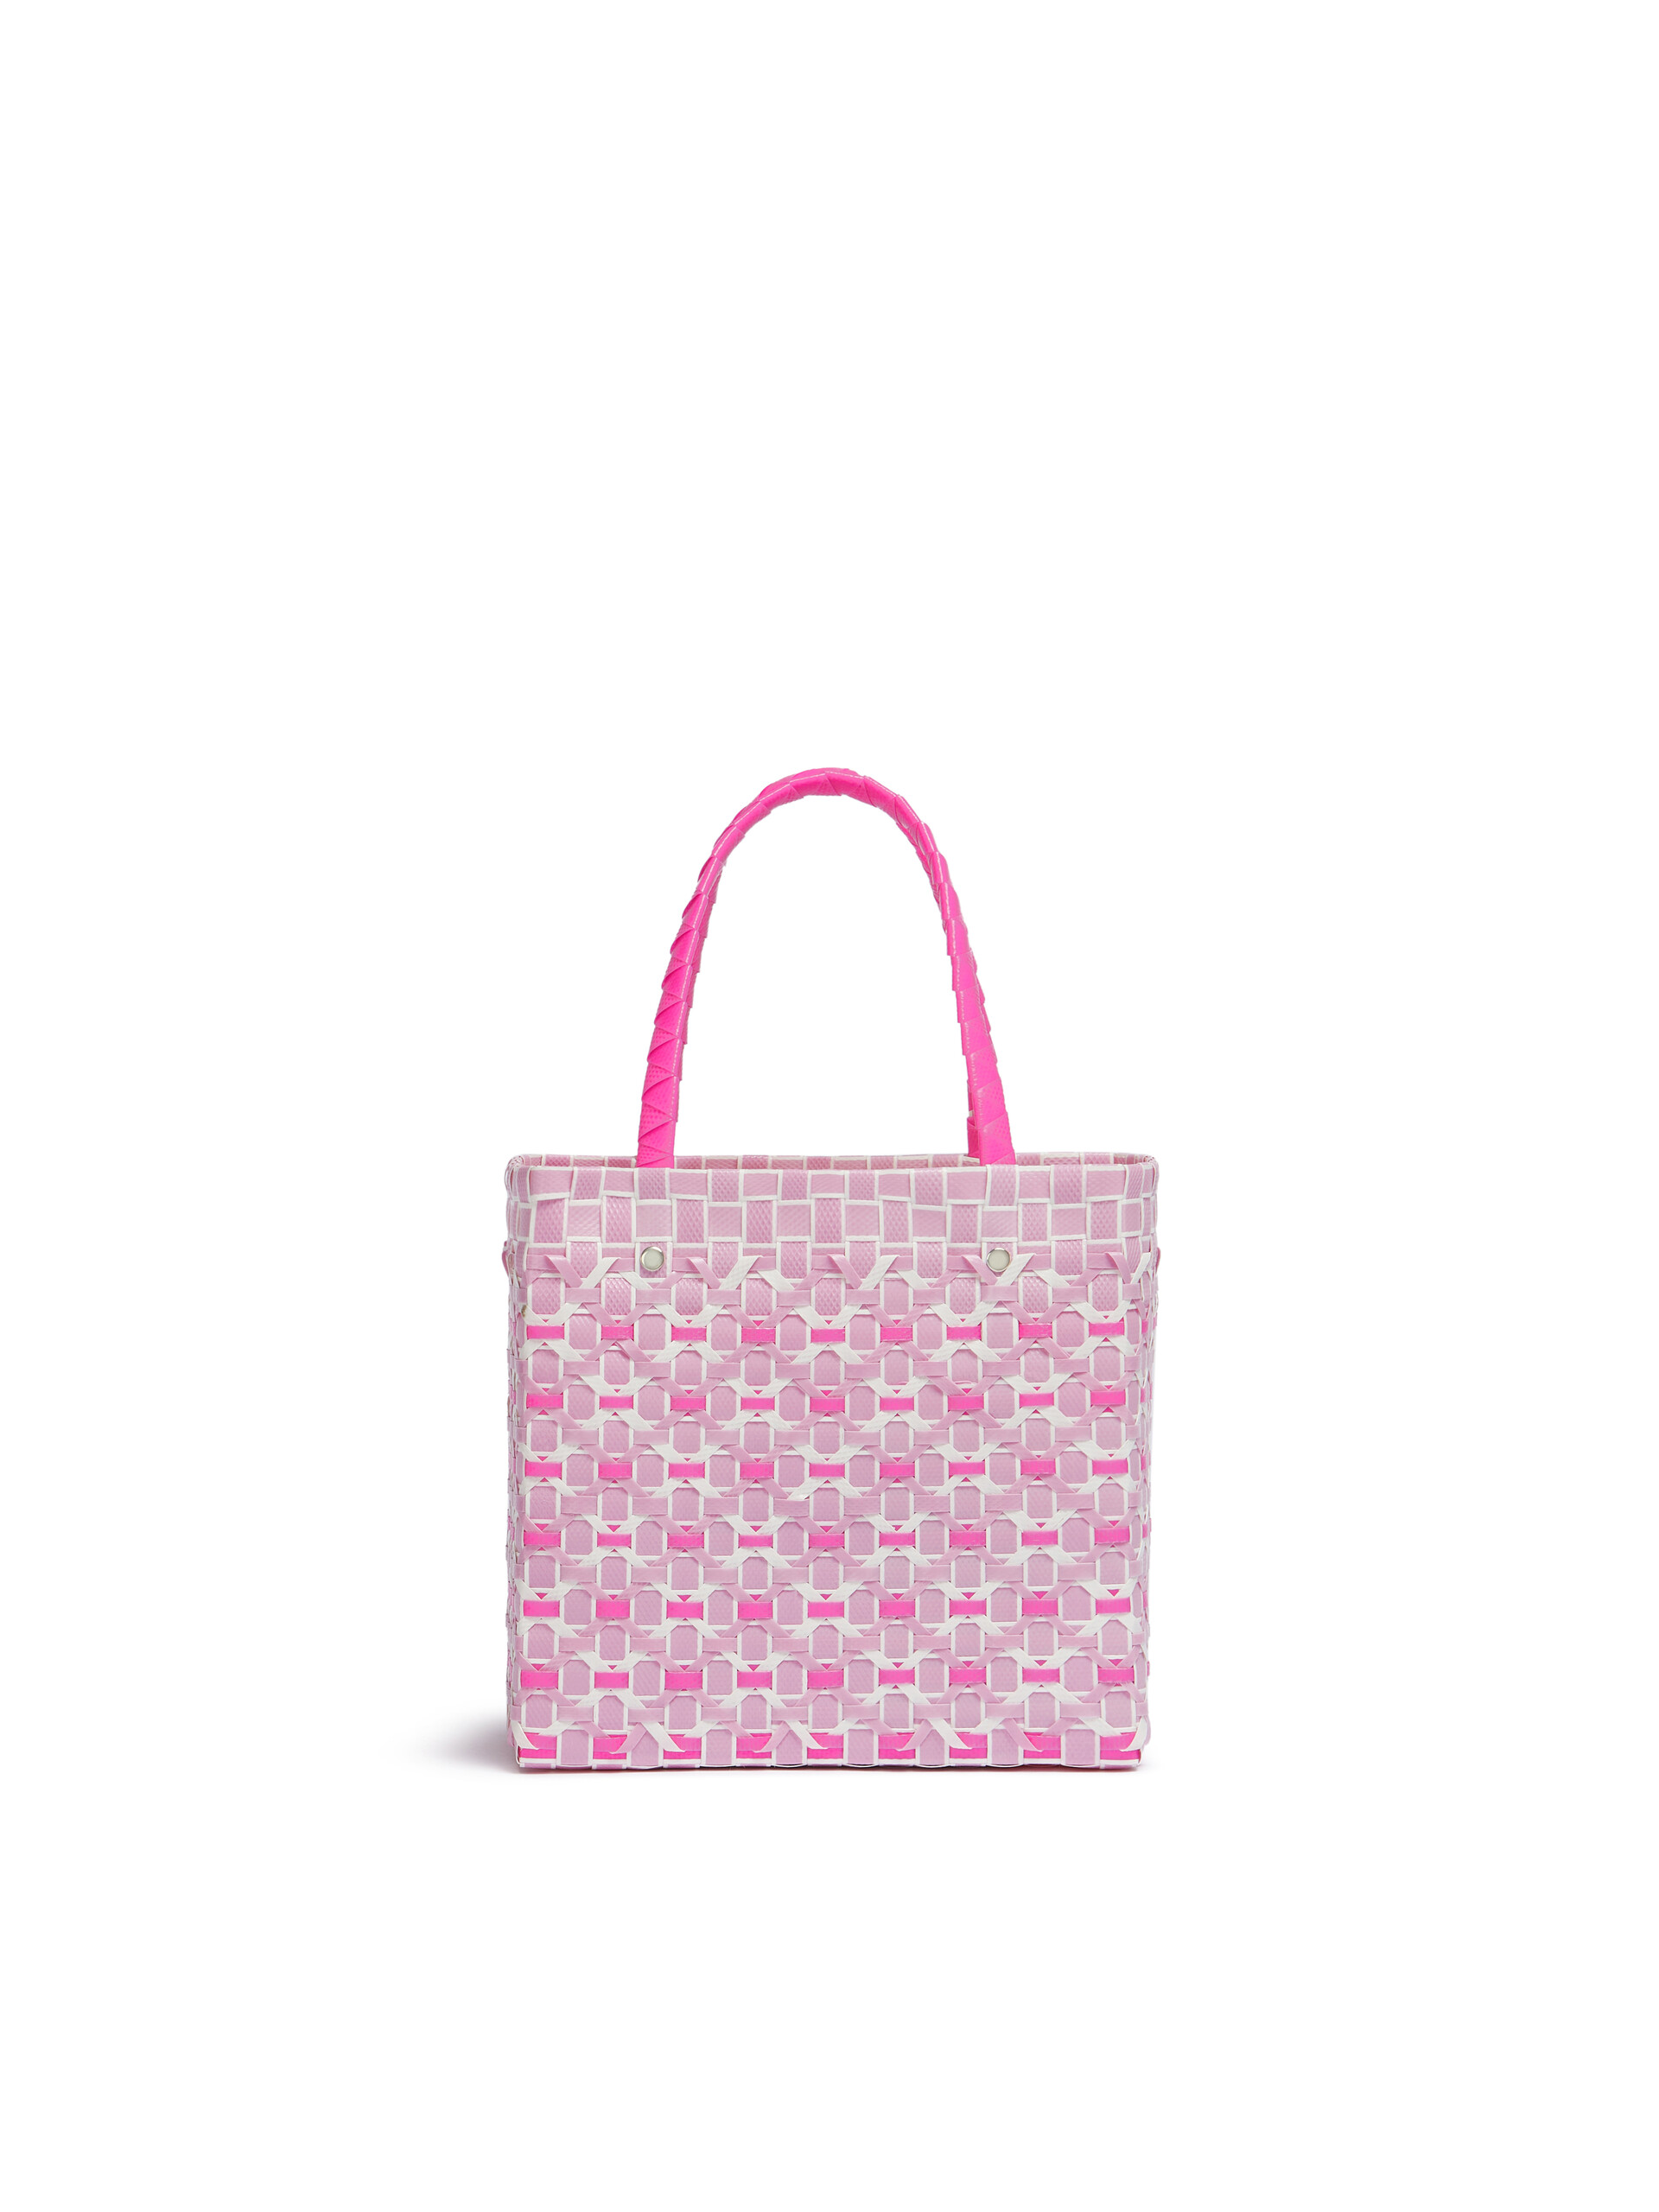 Blue And Red Marni Market Criss-Cross Mini Basket Bag - Shopping Bags - Image 3